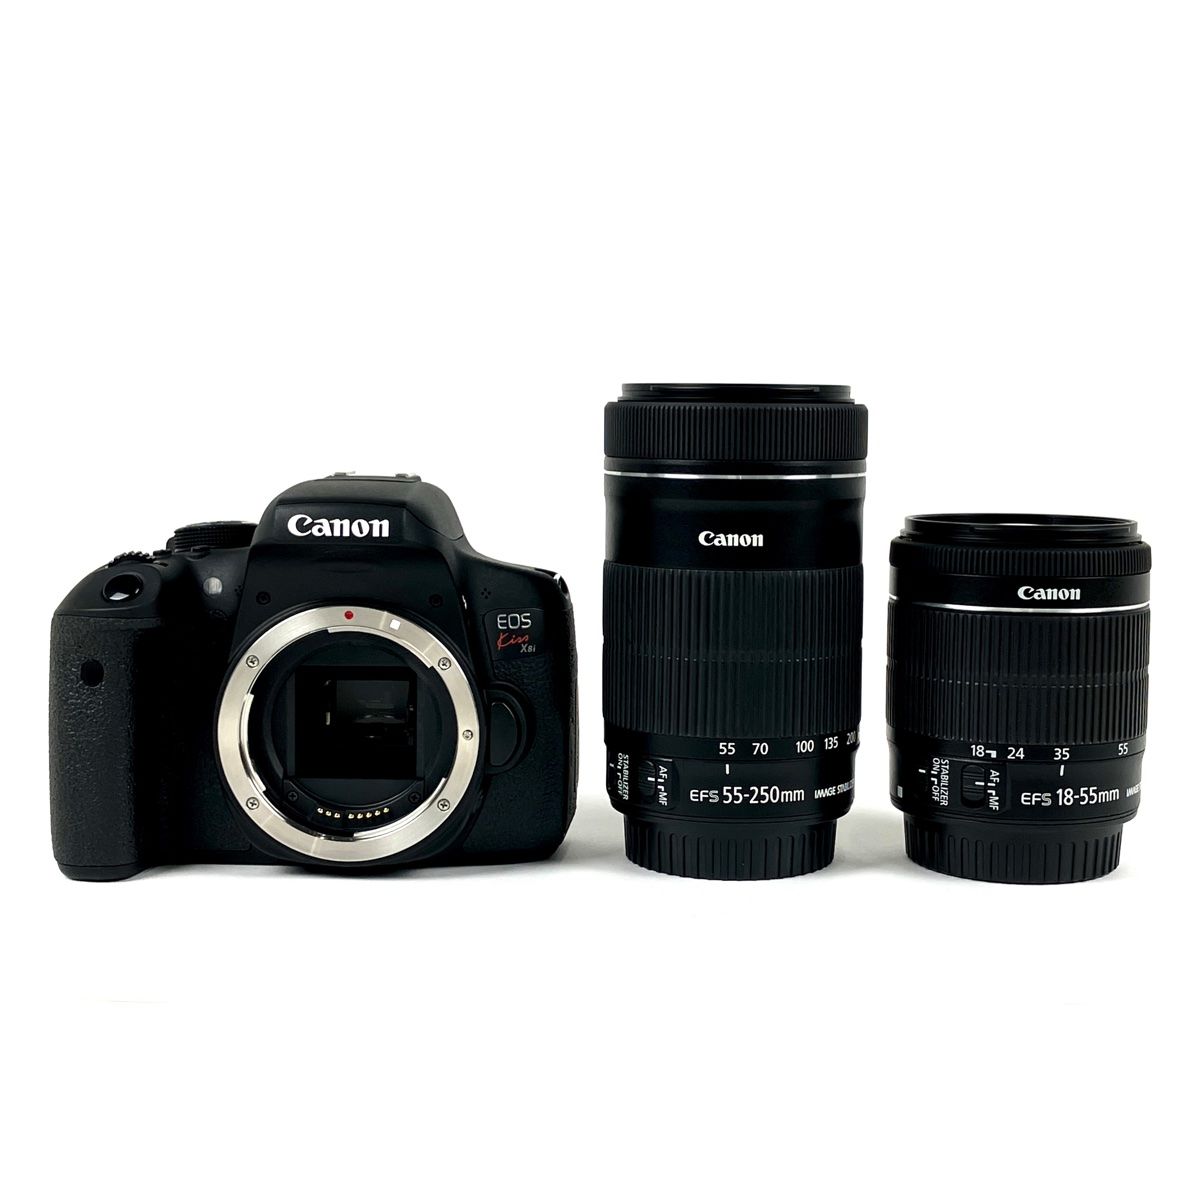 Canon　EOS　kiss X8i(W) ダブルズームキット　一眼レフカメラ